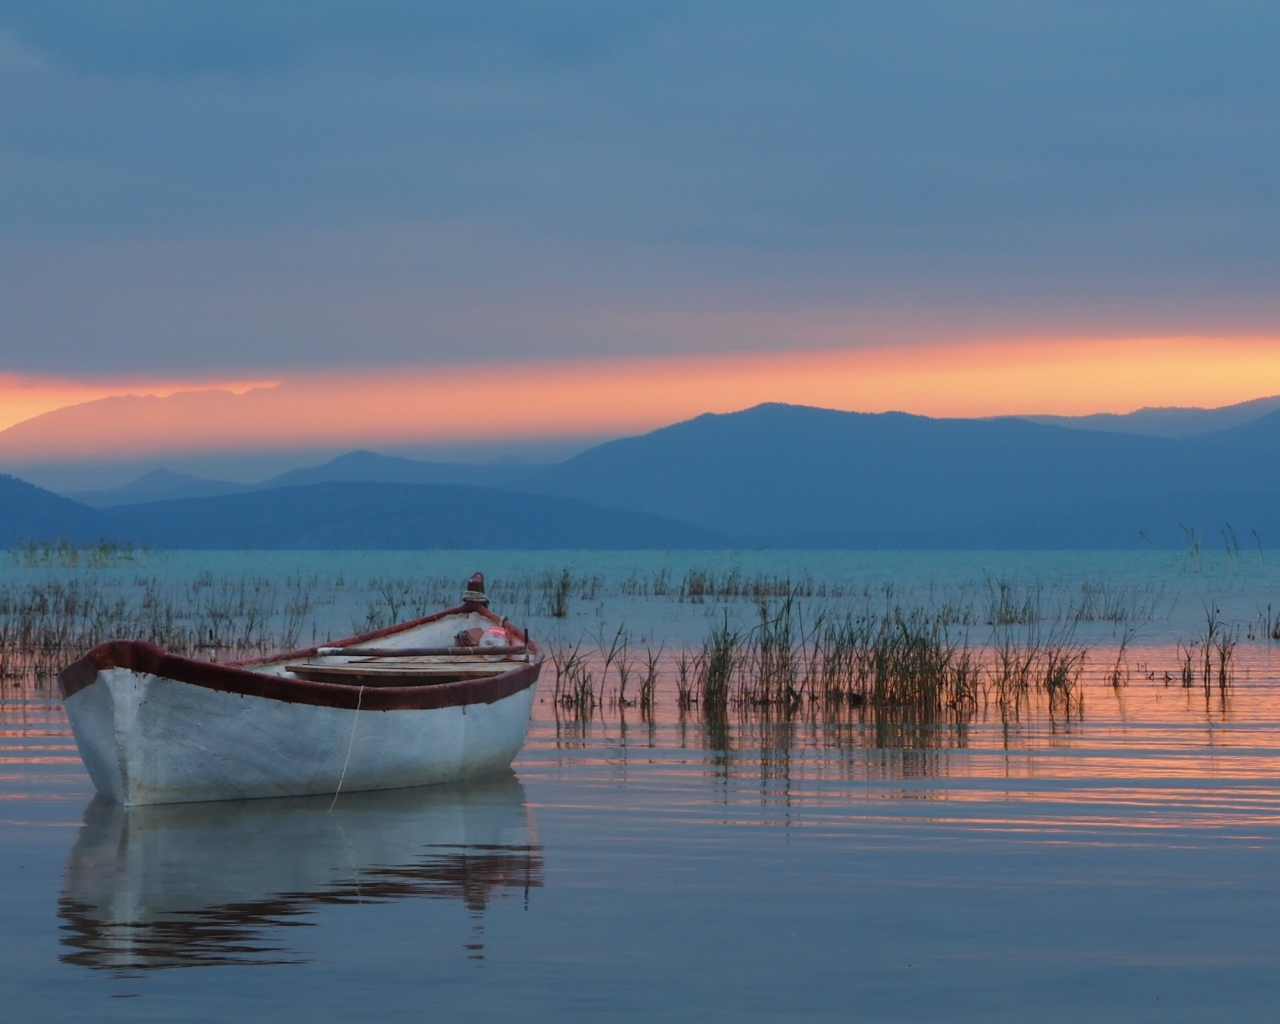 Lake Beysehir, Taurus Mountains, Turkey, озеро Бейшехир, Таврские горы, Турция, озеро, горы, лодка